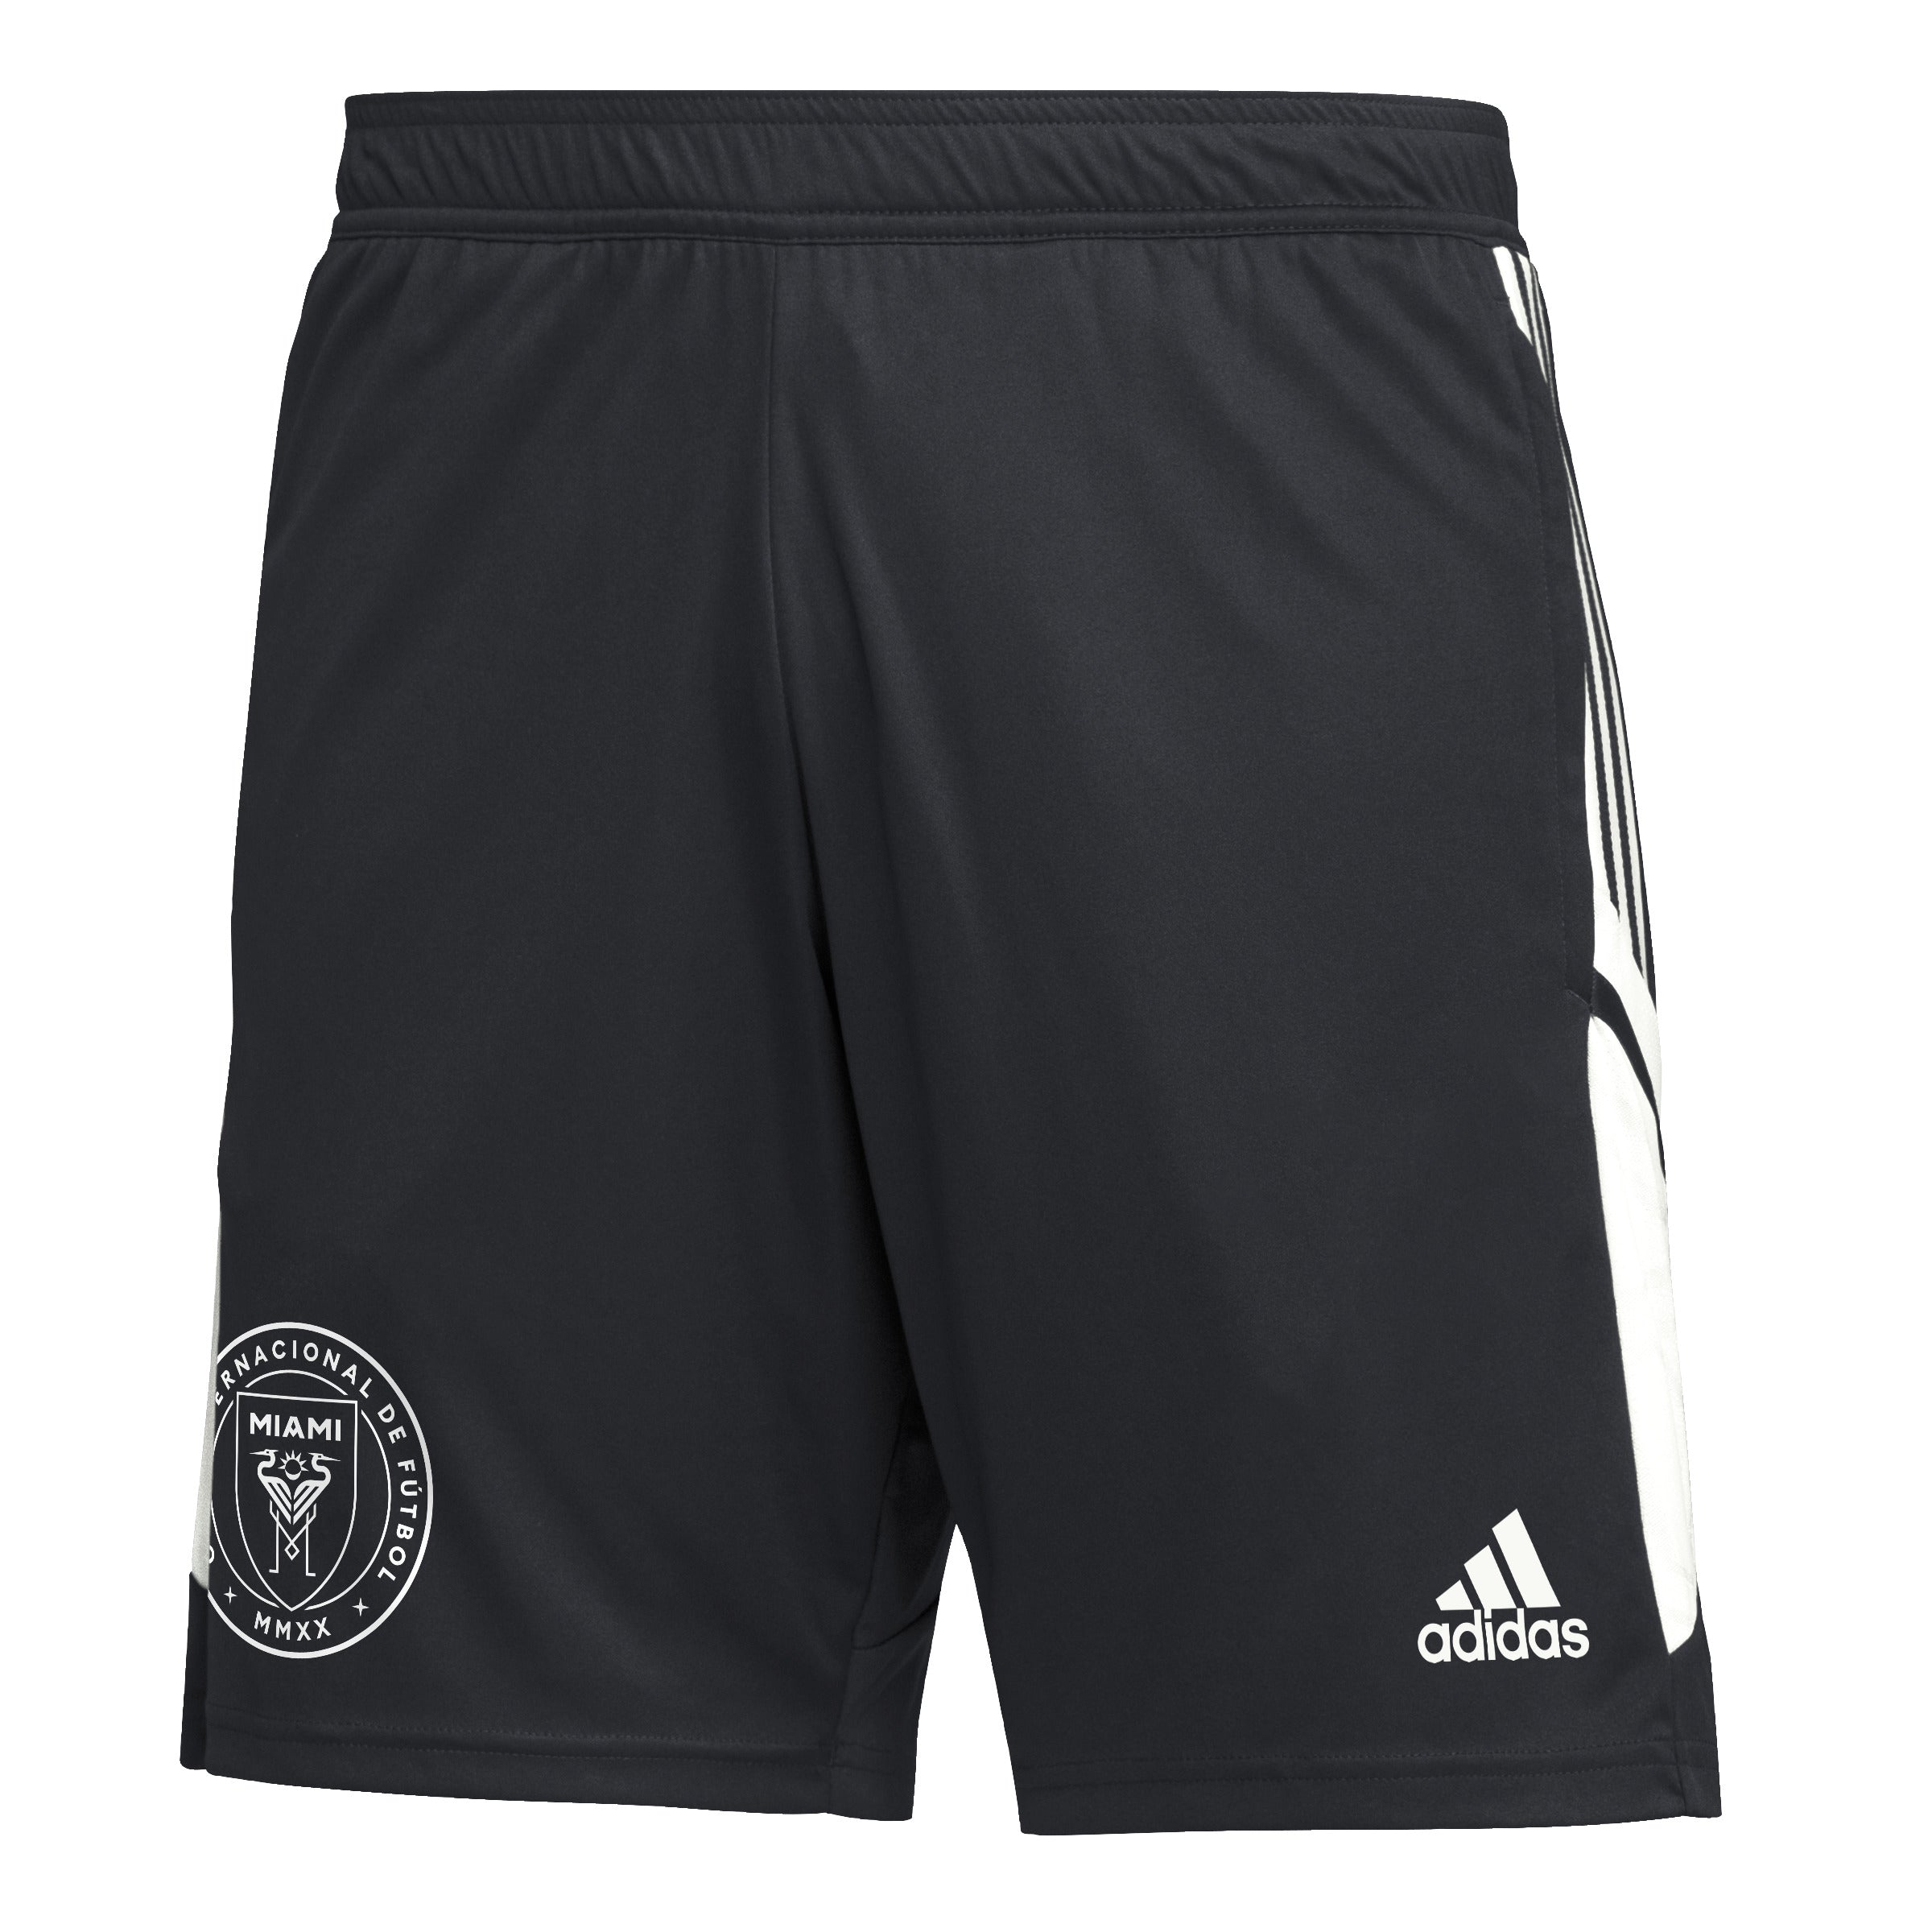 Inter Miami CF 2022 adidas Tricot Aeroready Training Shorts - Black